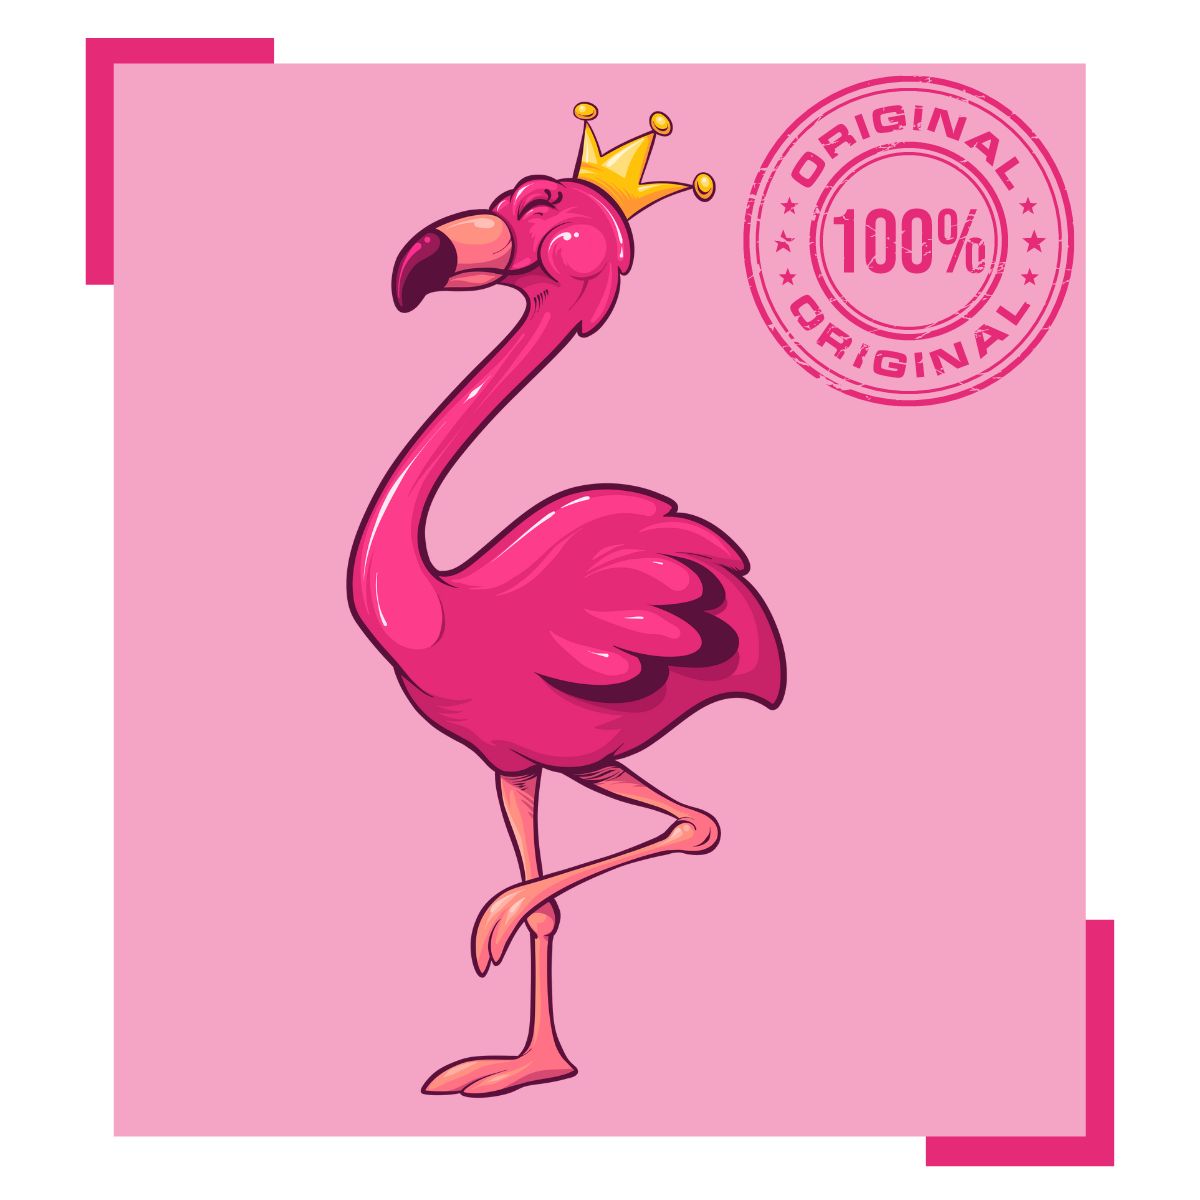 Original The Popular Flamingo Hoodie